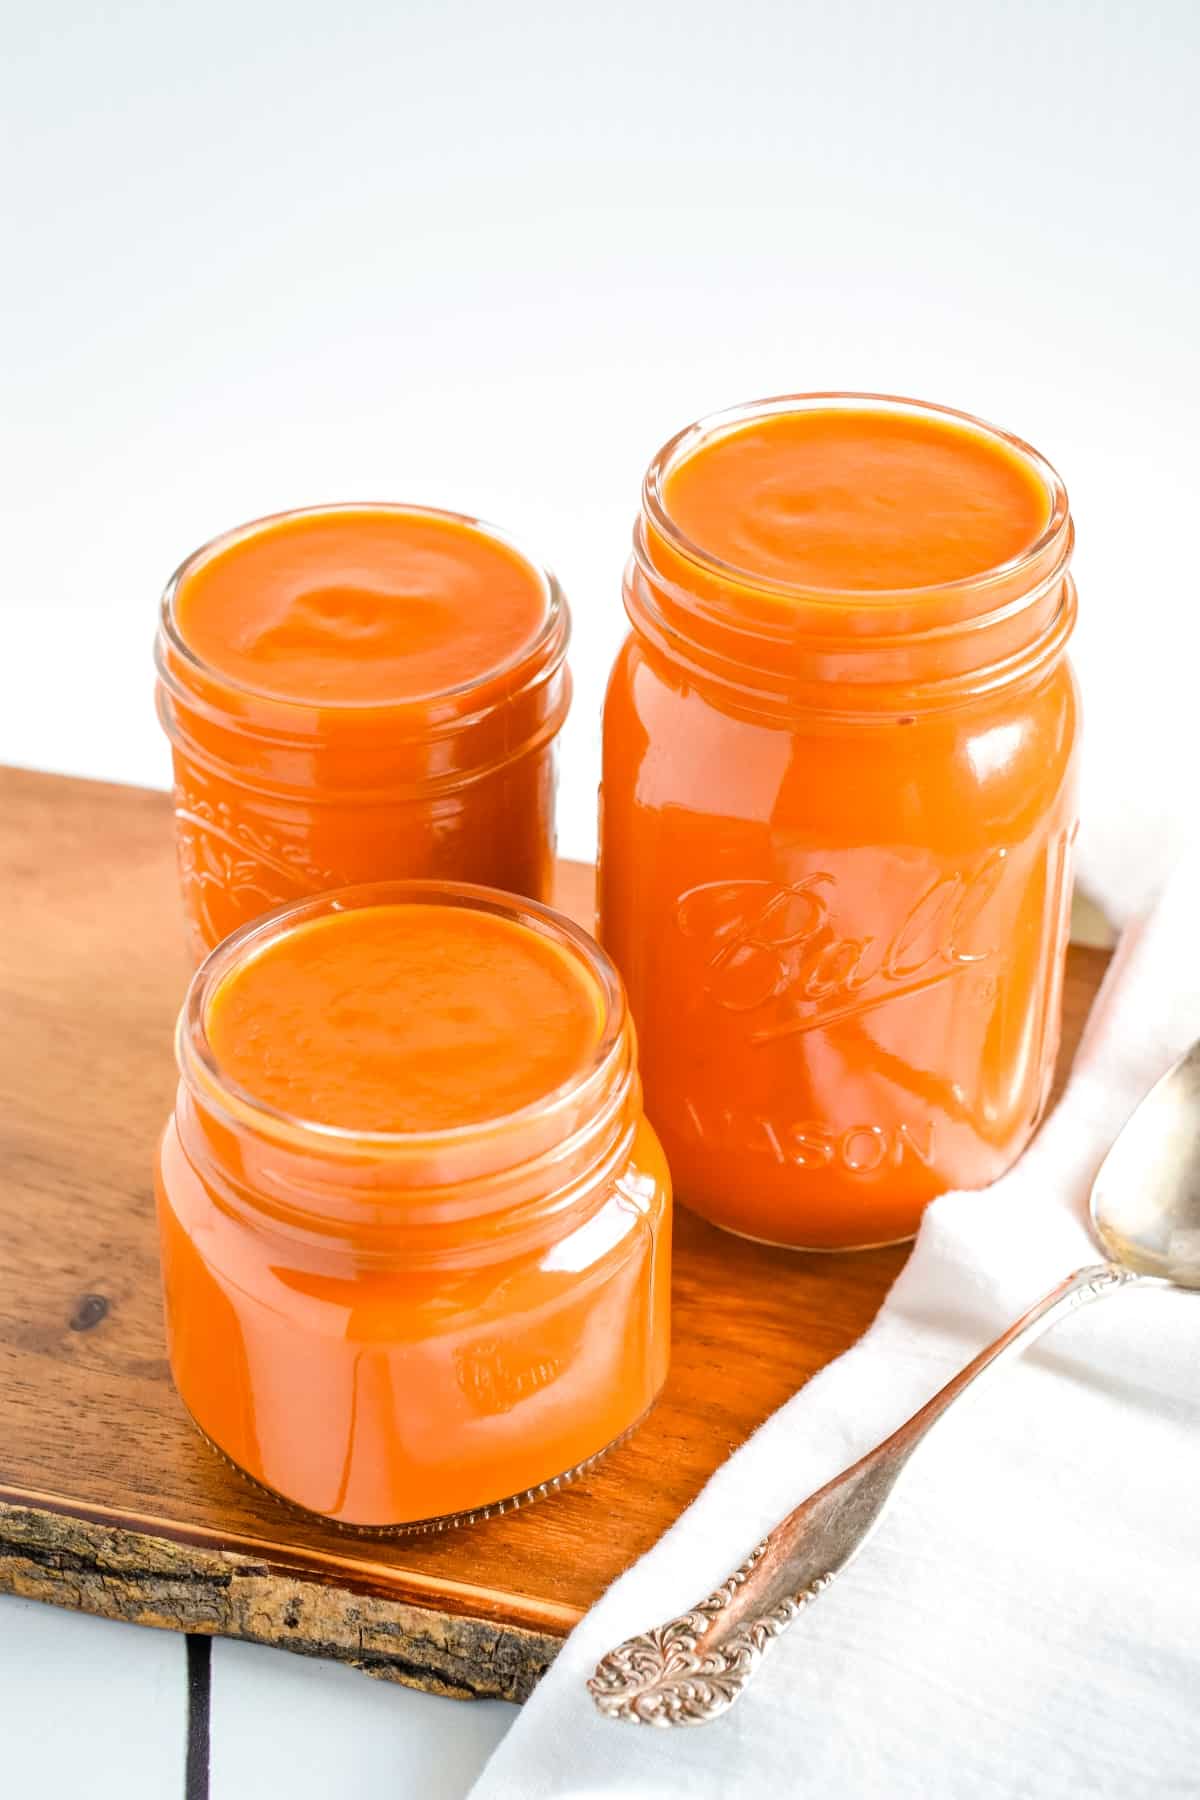 Sauce in Mason jars.